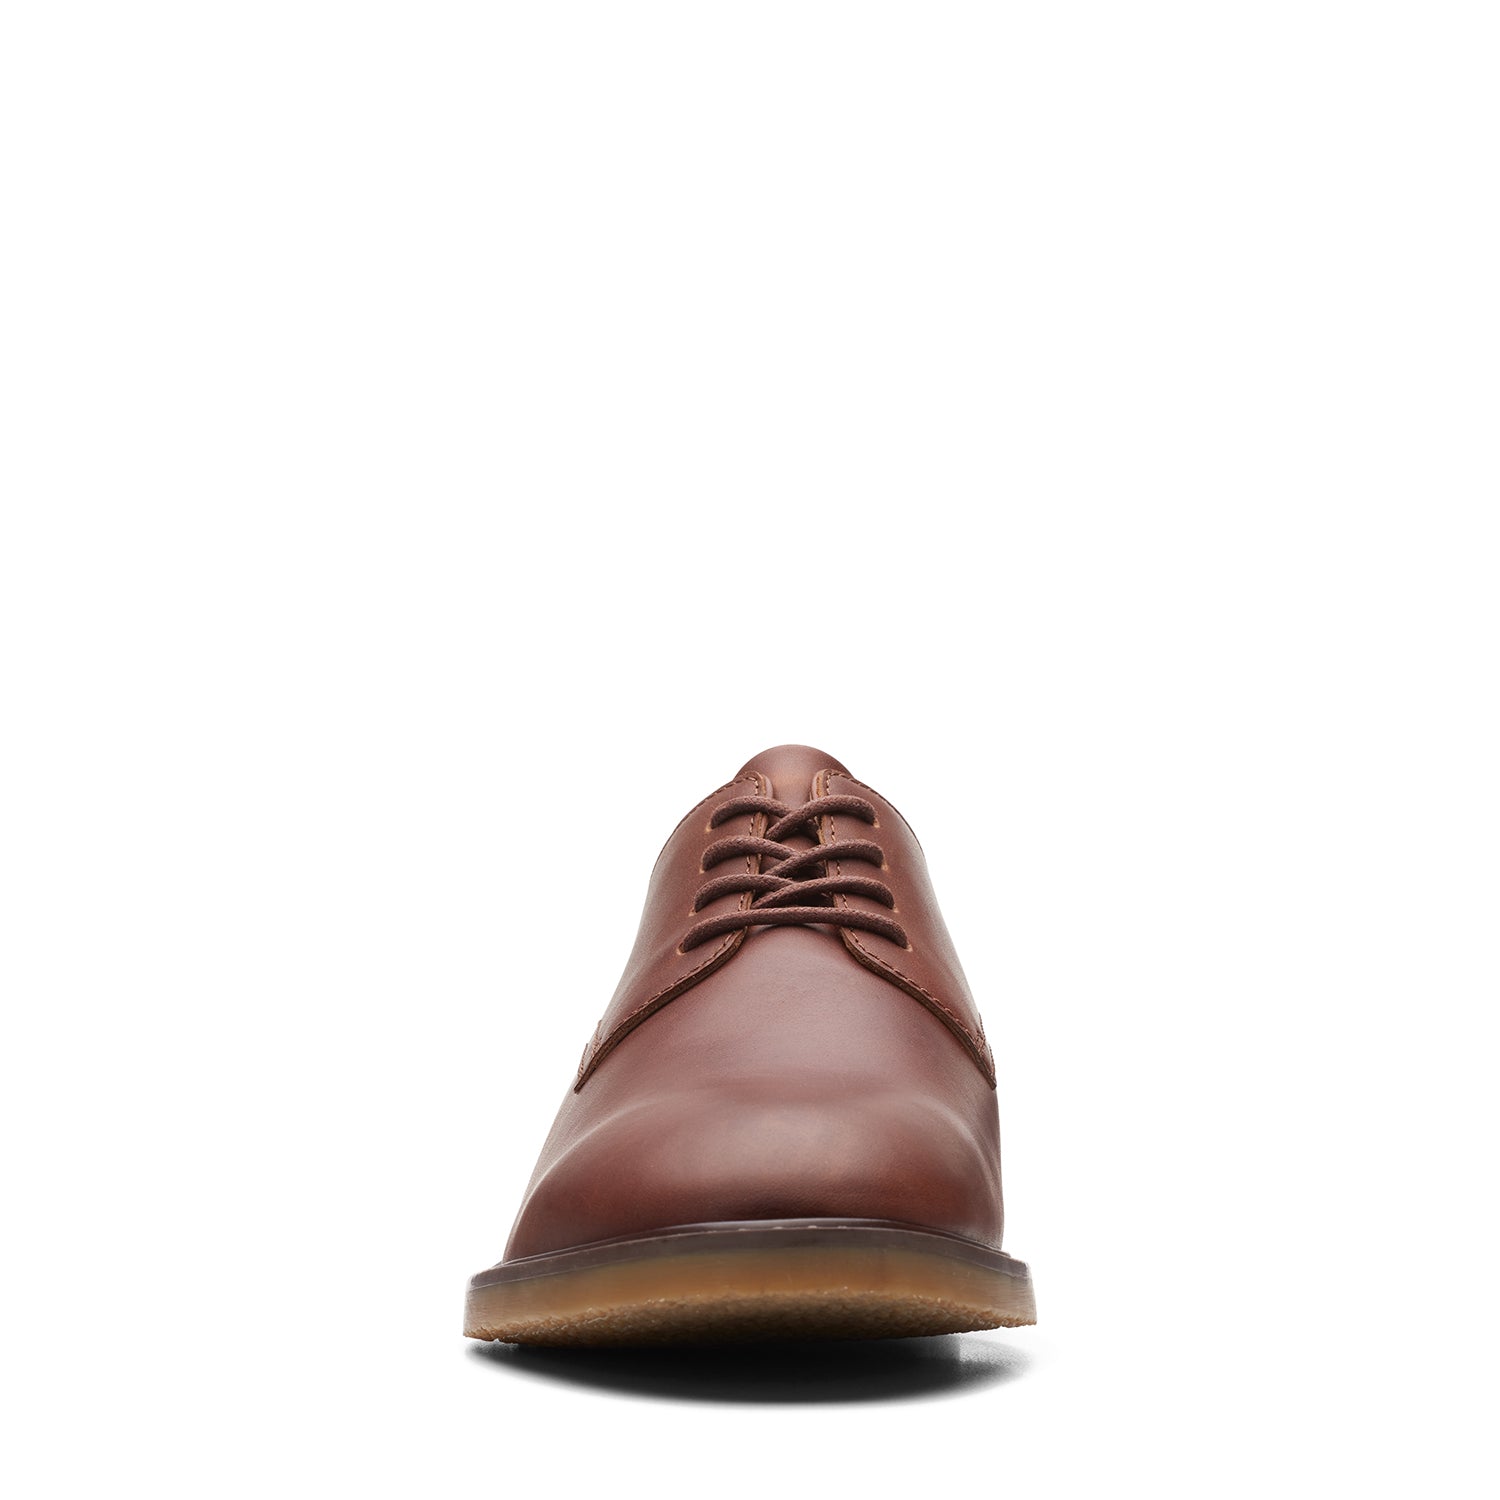 Clarks Jaxen Low Shoes - Tan Leather - 261651847 - G Width (Standard Fit)